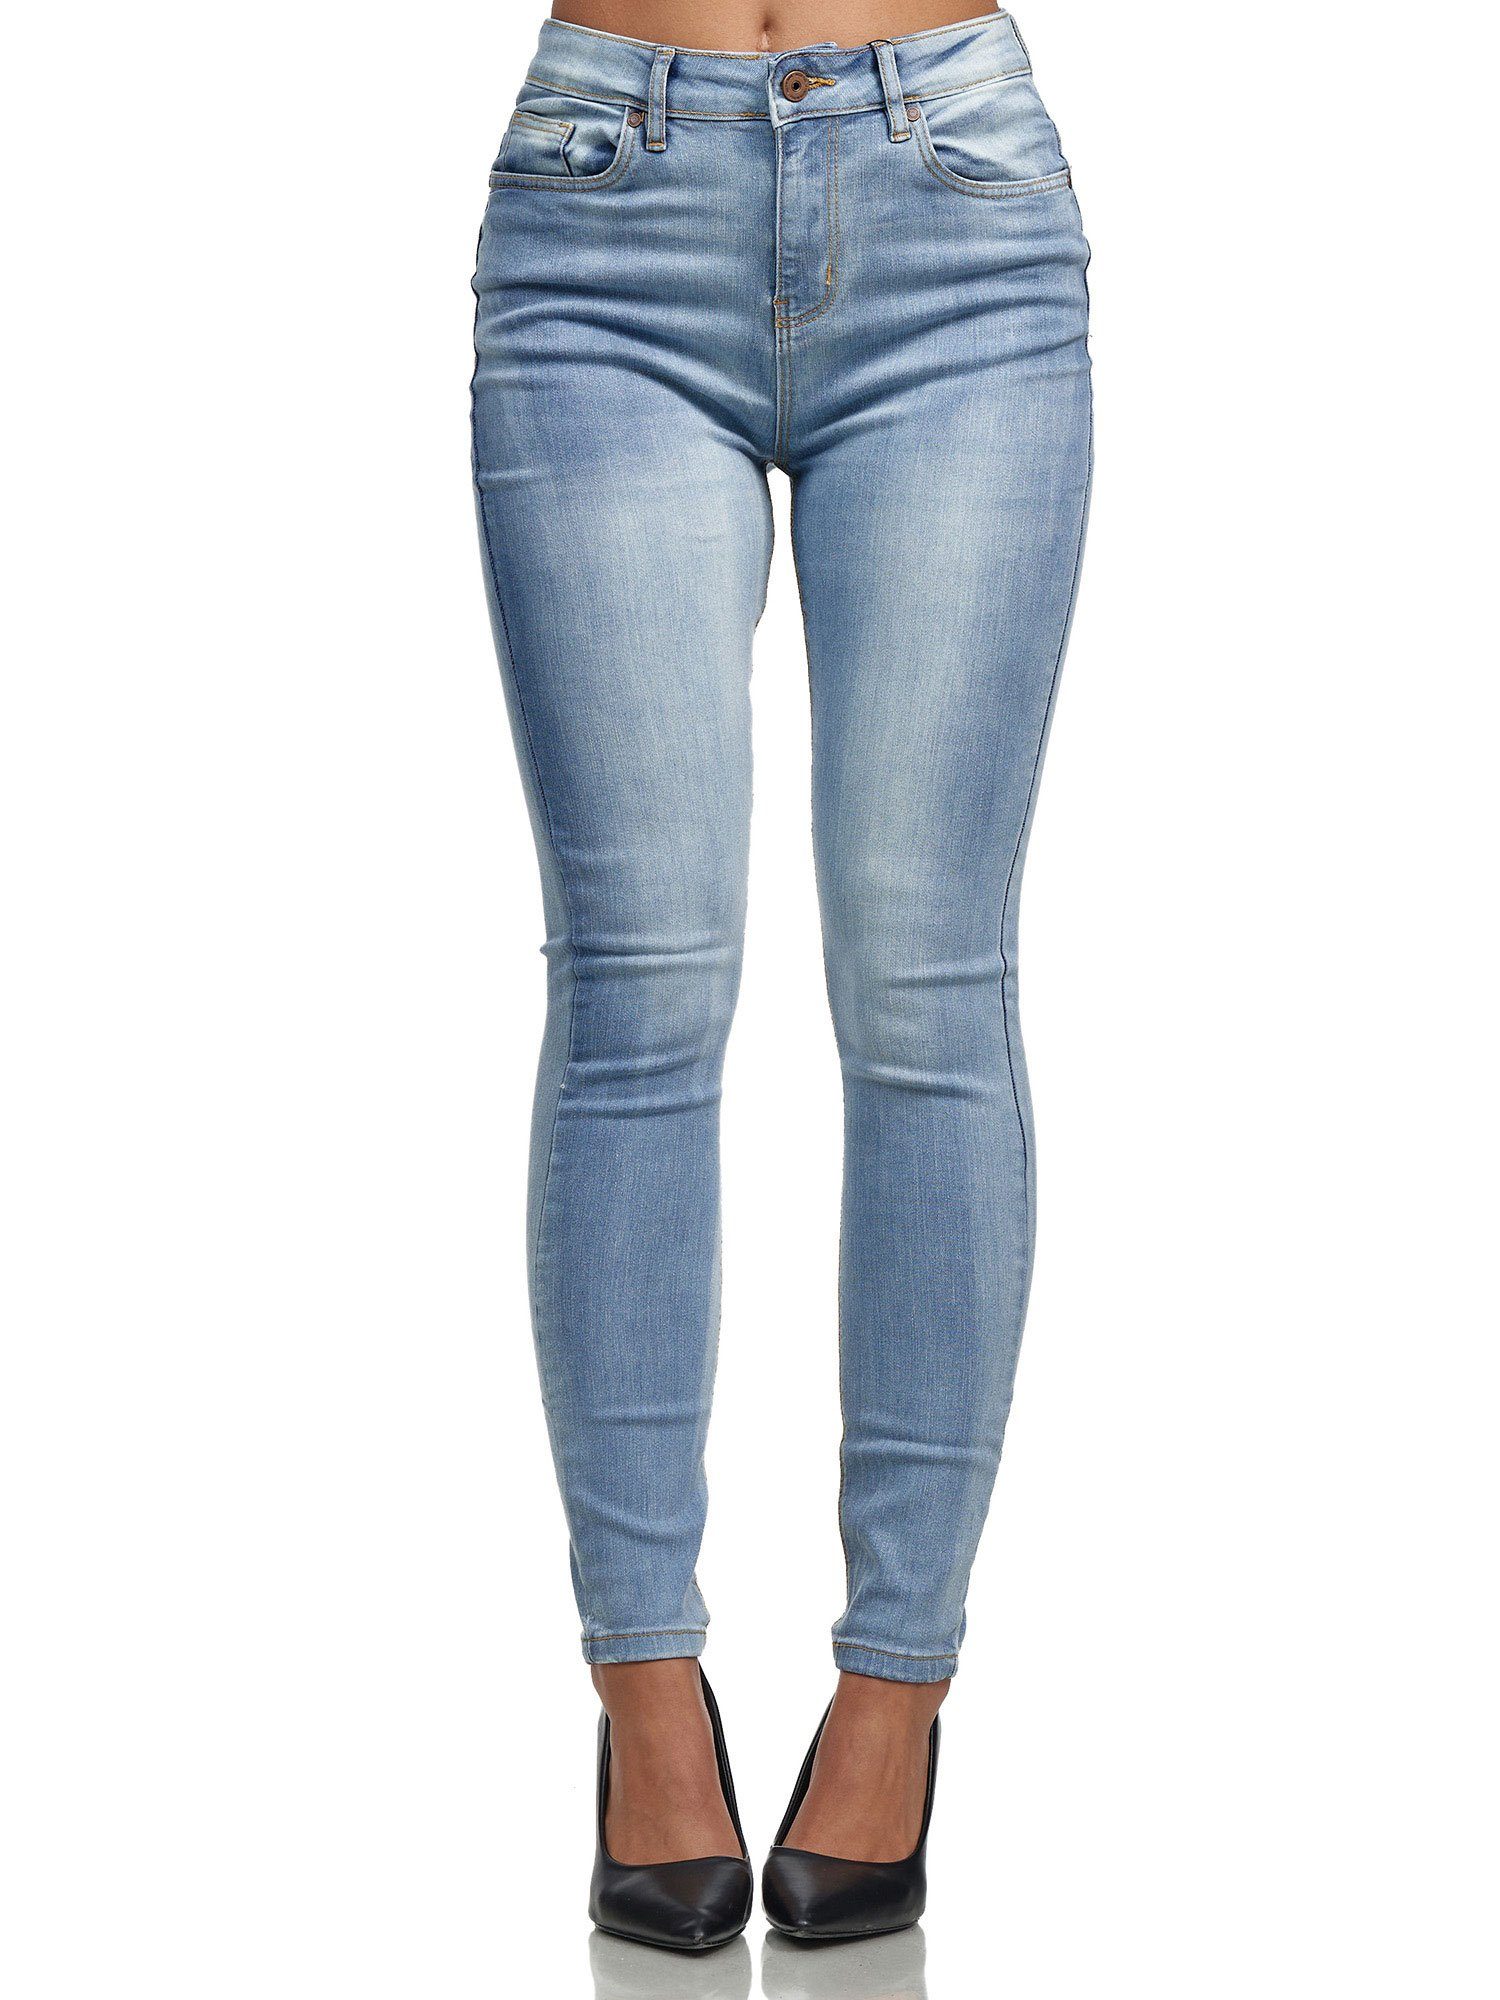 Tazzio High-waist-Jeans F101 Damen Skinny Fit Jeanshose hellblau